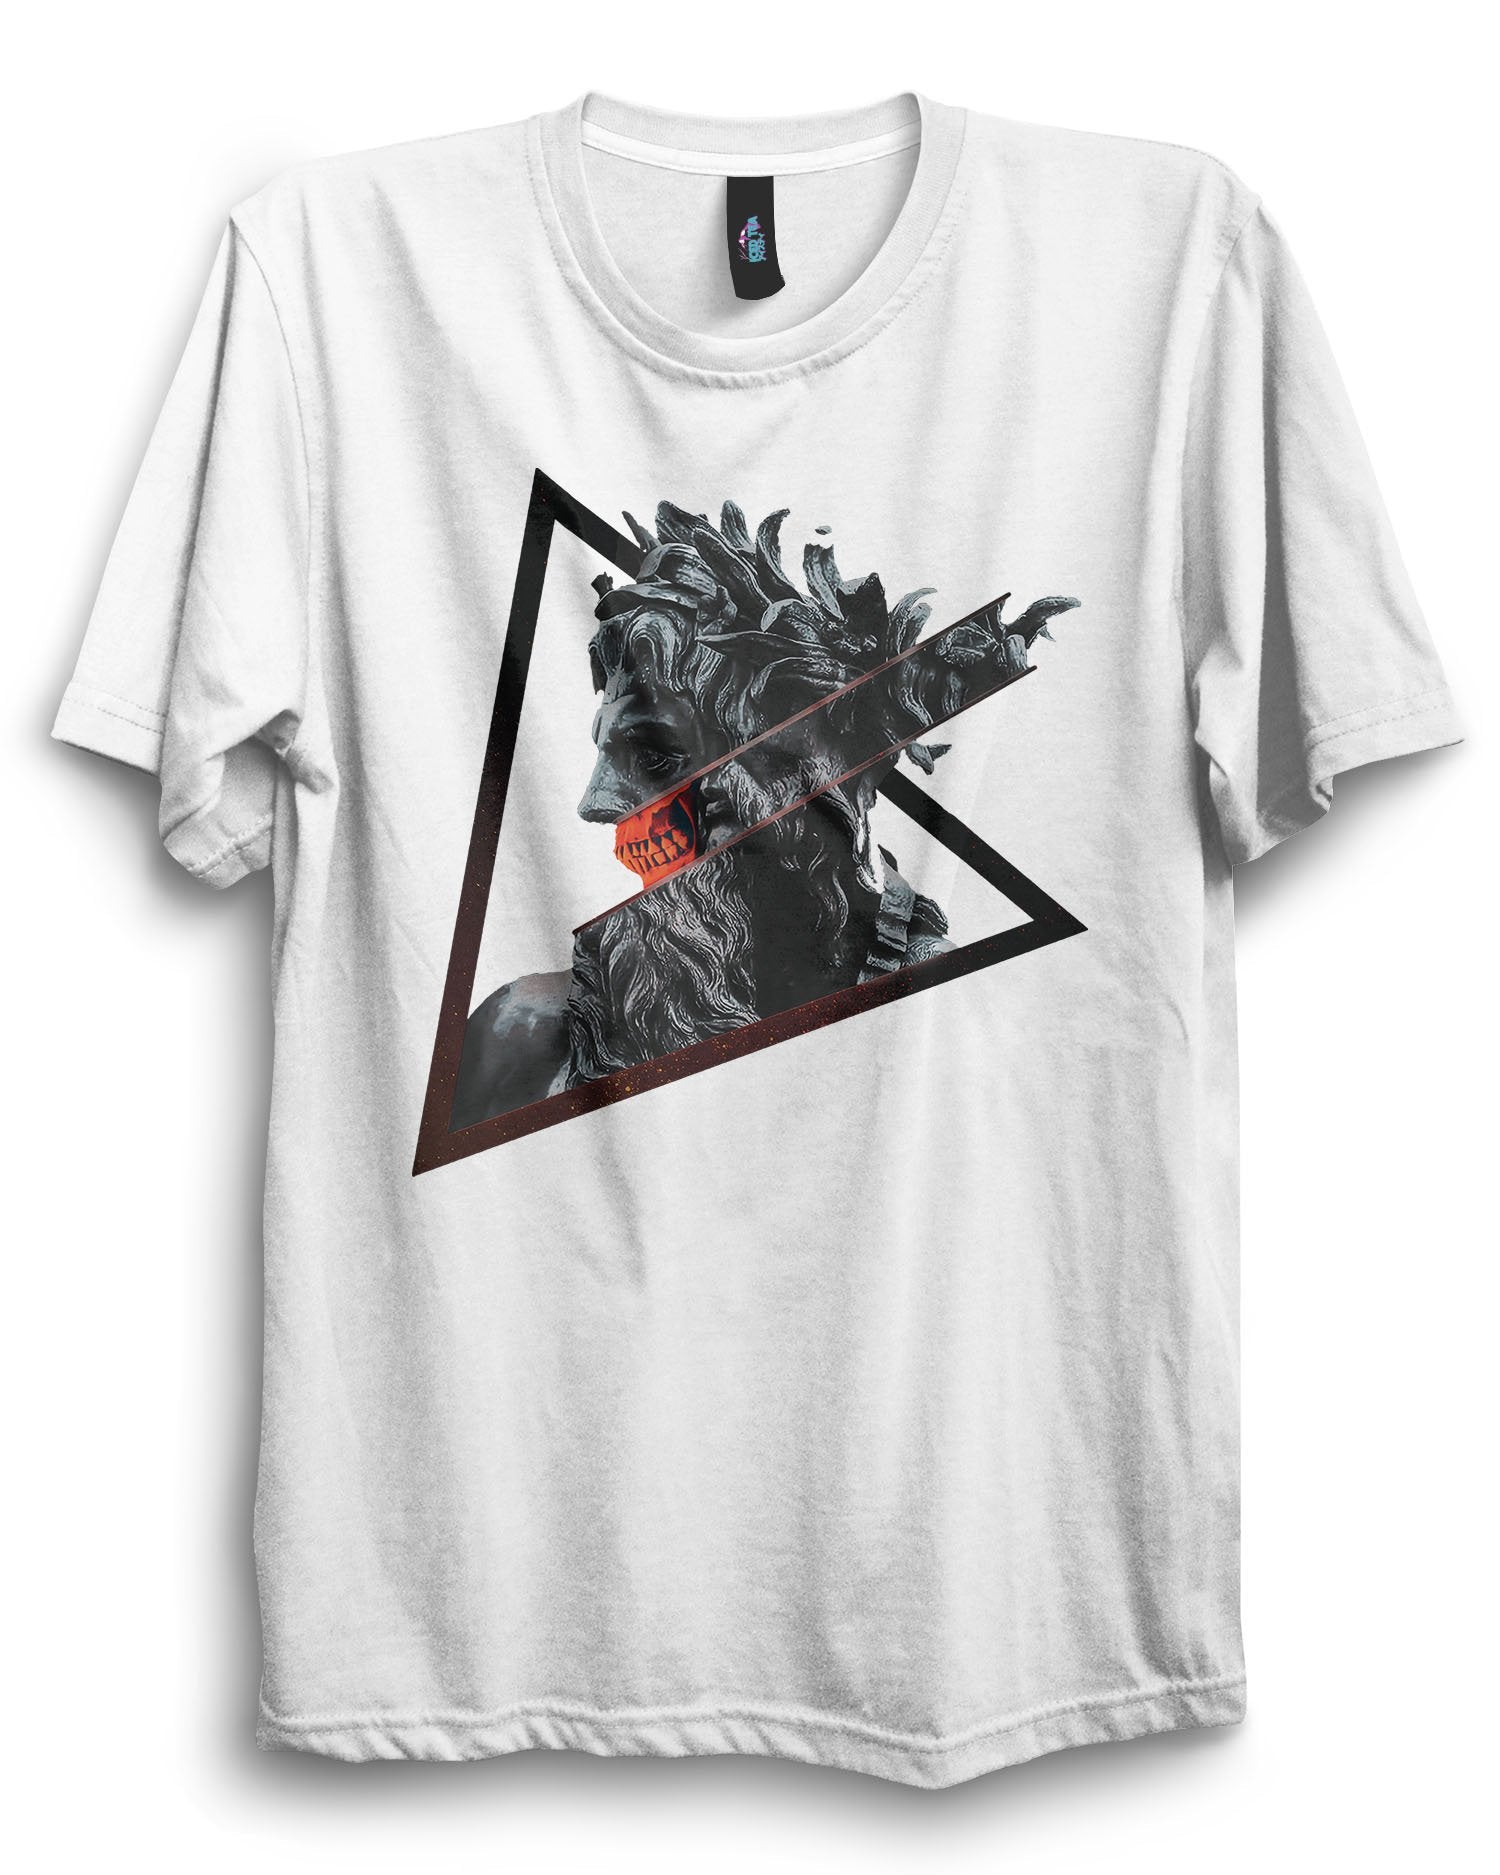 ZEUS - Aesthetic T-Shirt - Dark Aesthetics and Anime Clothing Streetwear